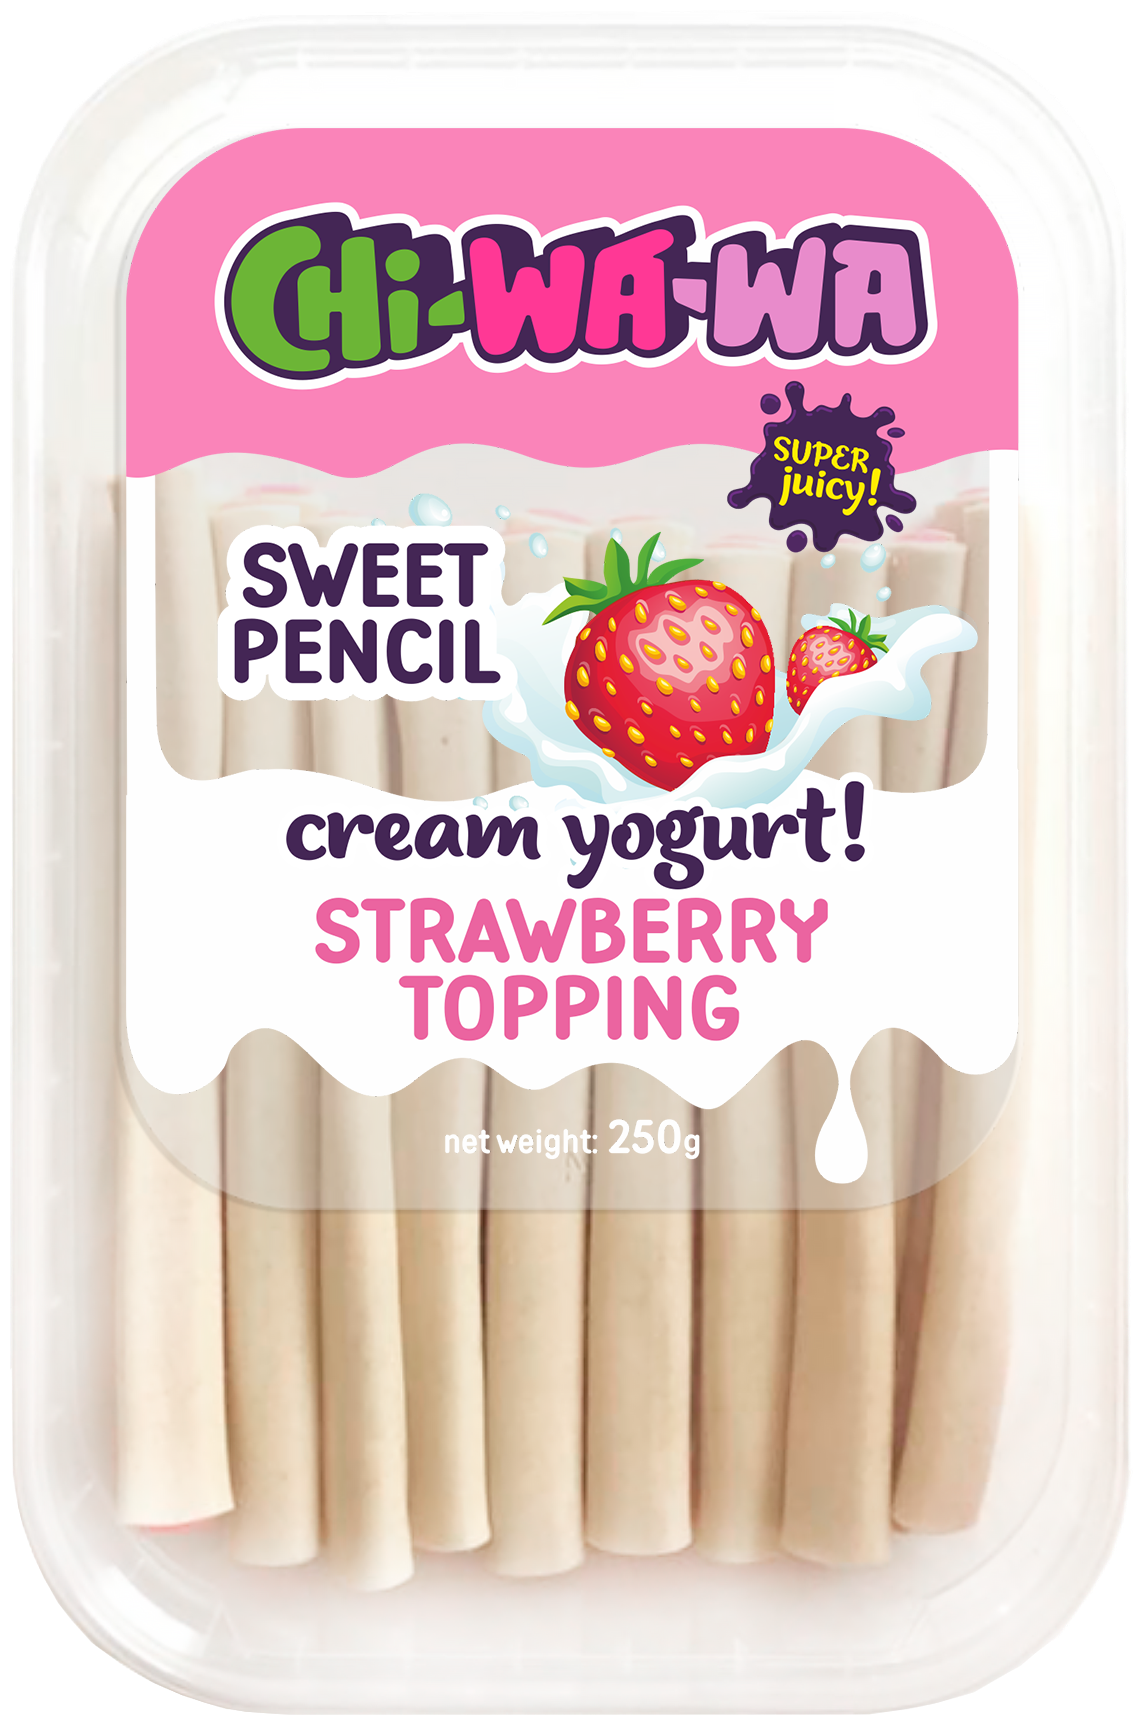 Экструзионный мармелад CHI-WA-WA карандаш сливки сладкий 250г